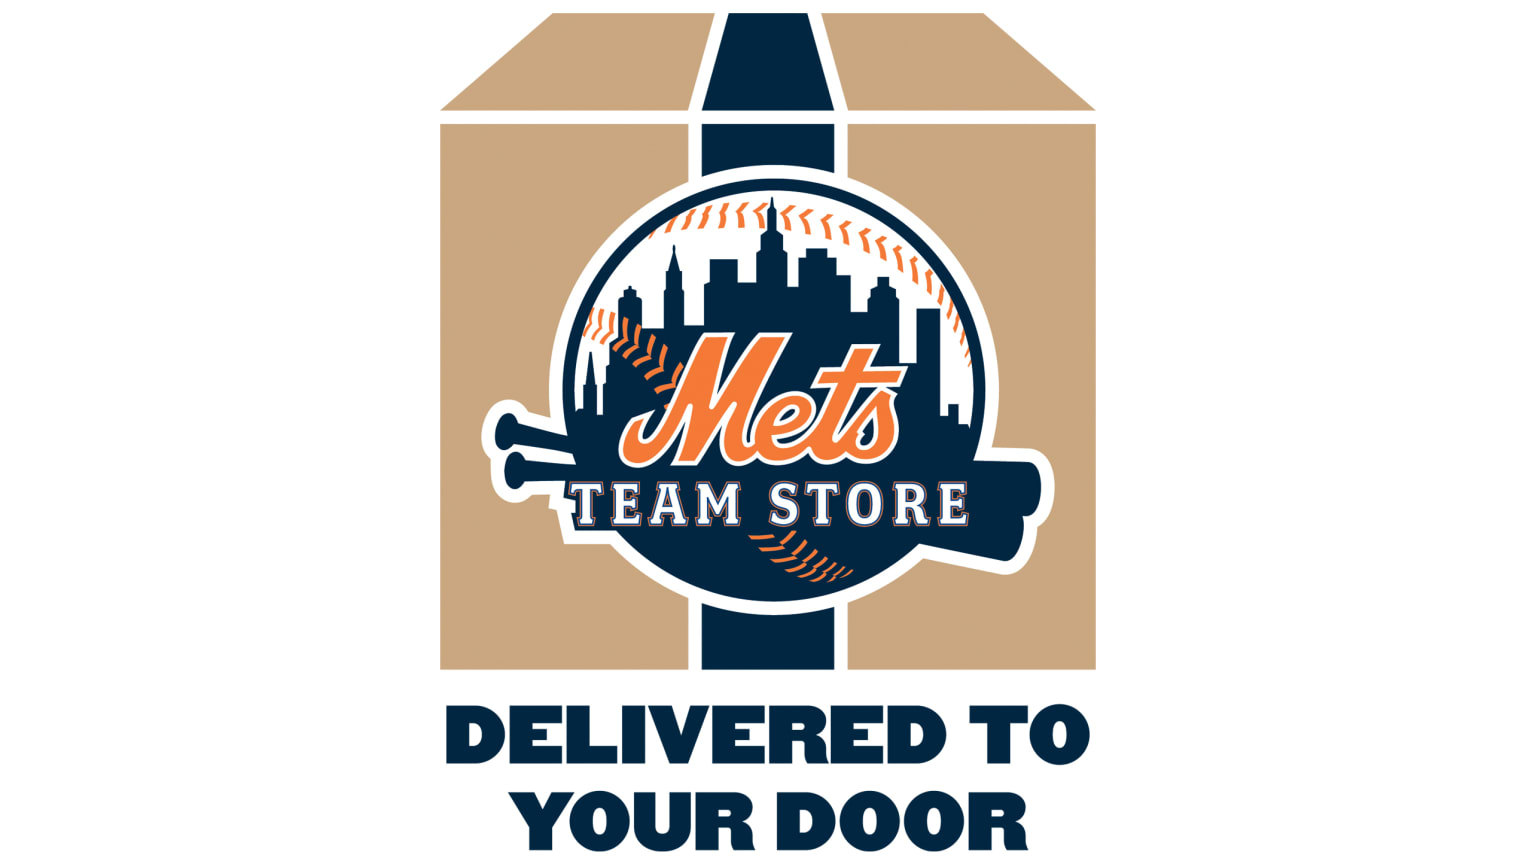 New York Teams Store